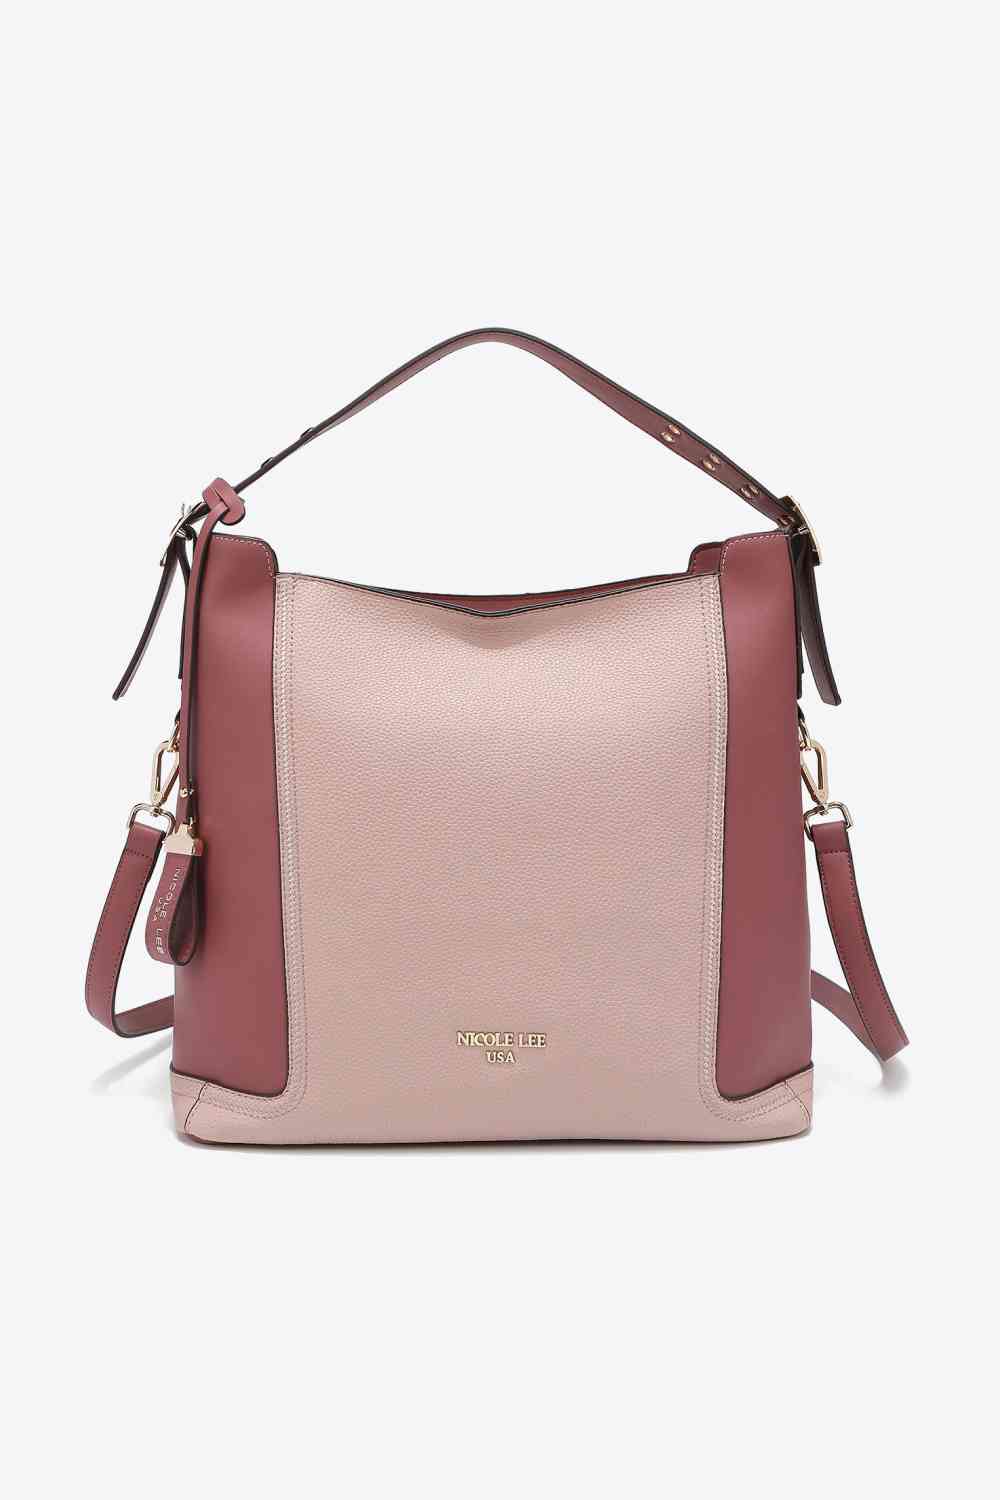 Nicole Lee USA Make it Right Handbag - GemThreads Boutique